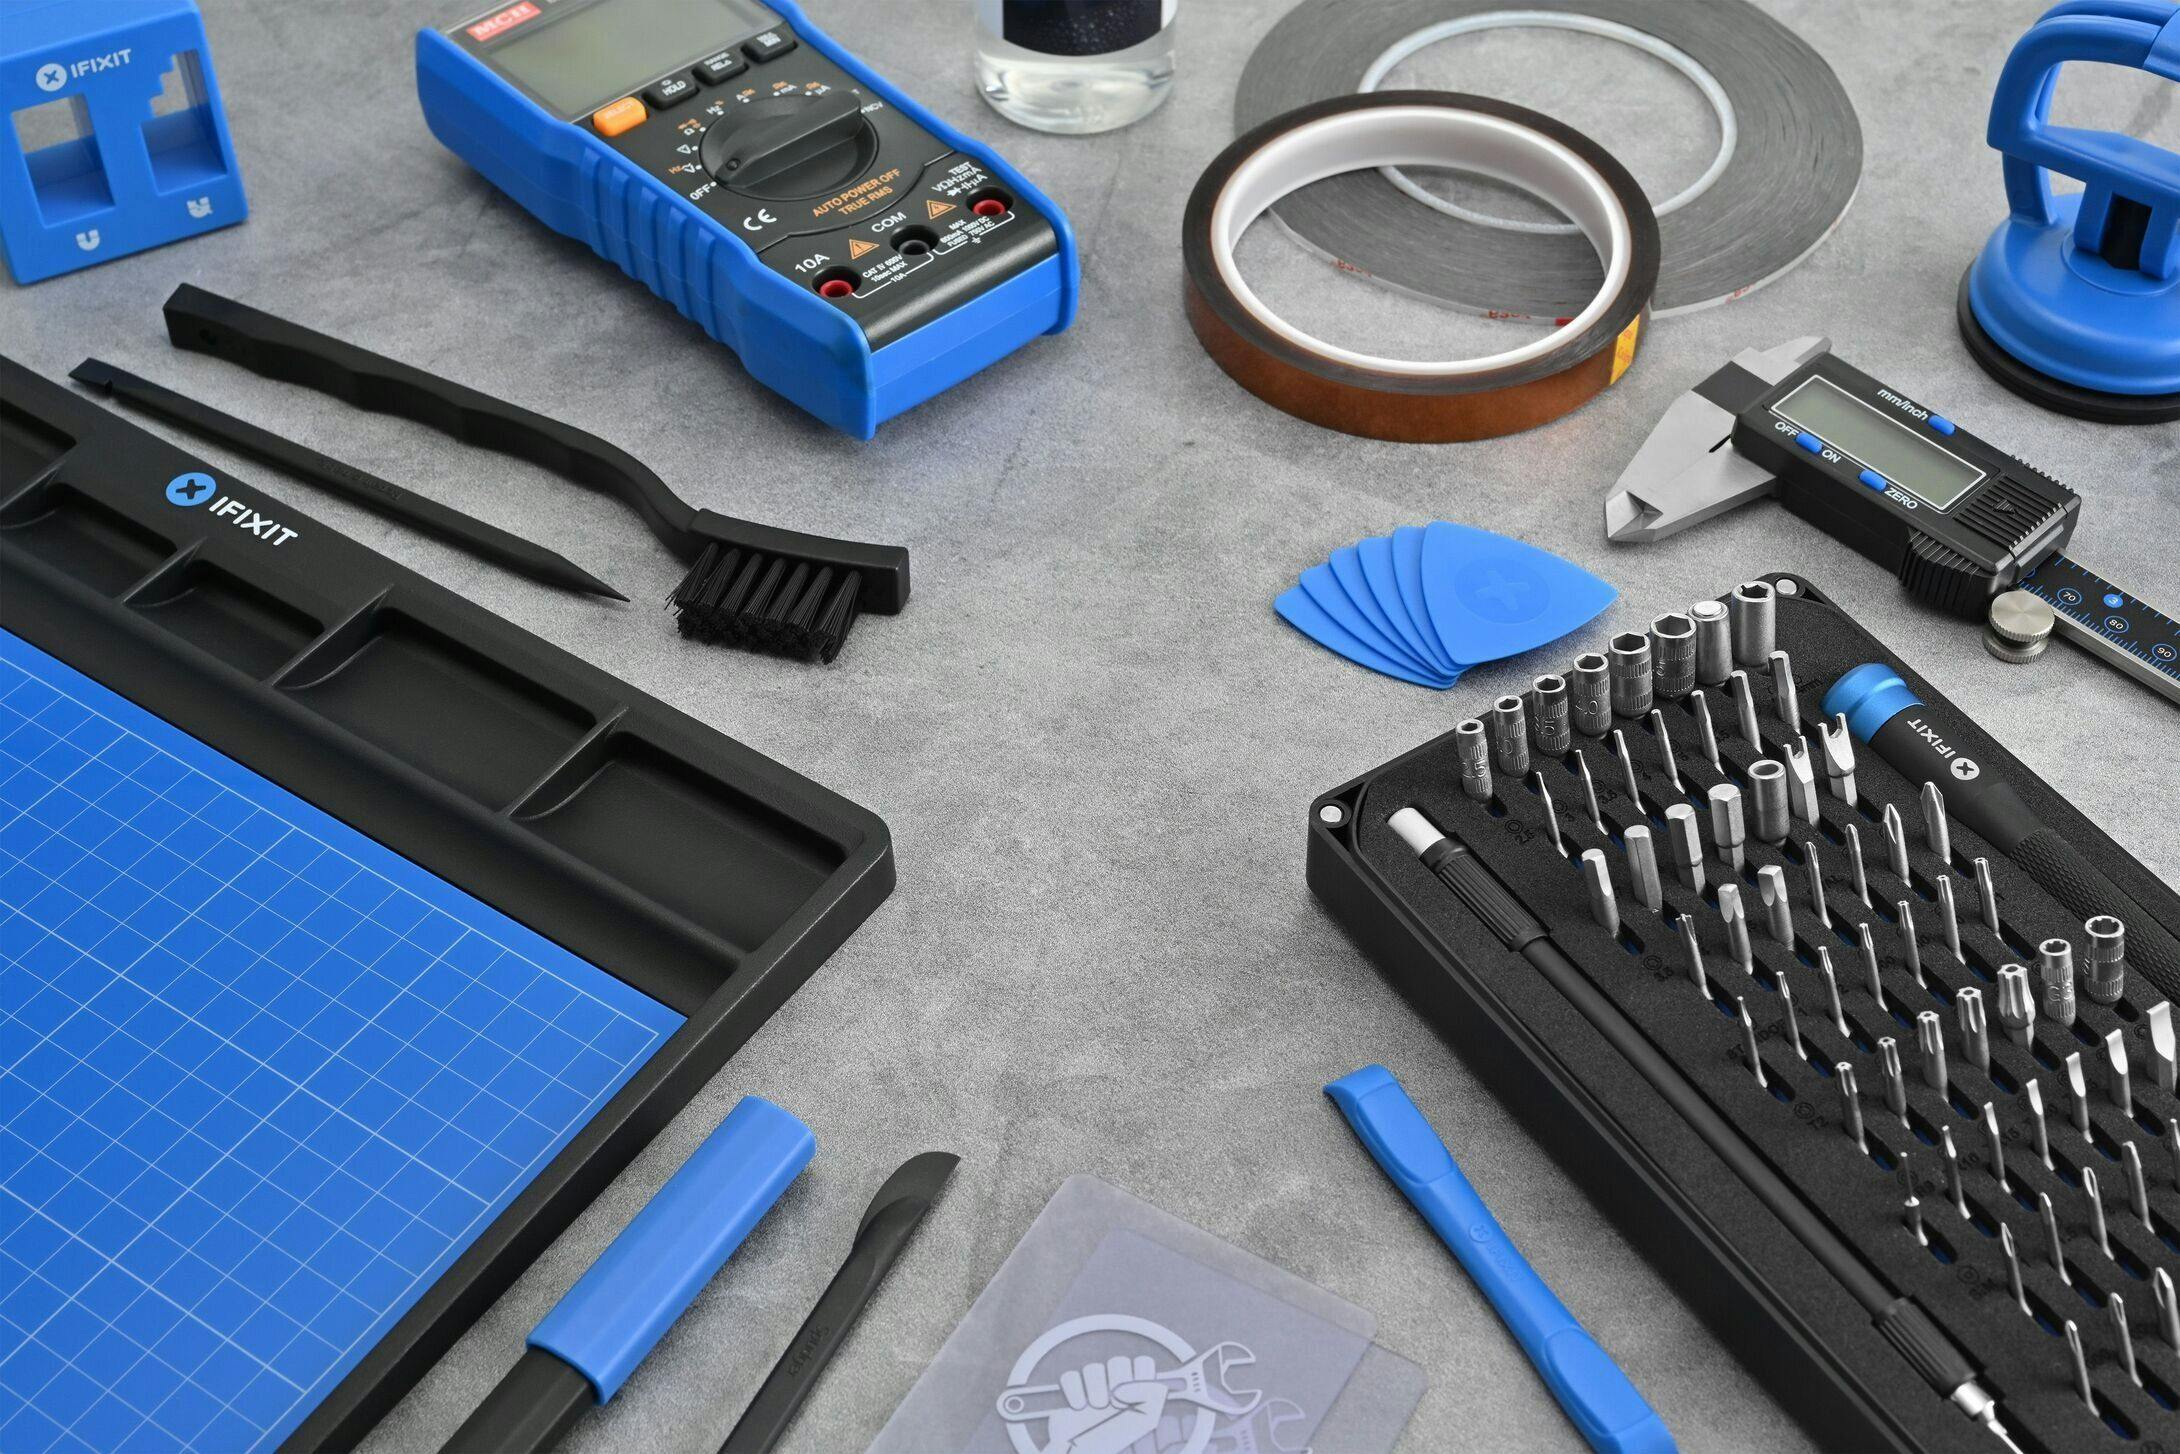  iFixit Everyday Carry Bundle - Portable Electronics Repair Kit  : Electronics